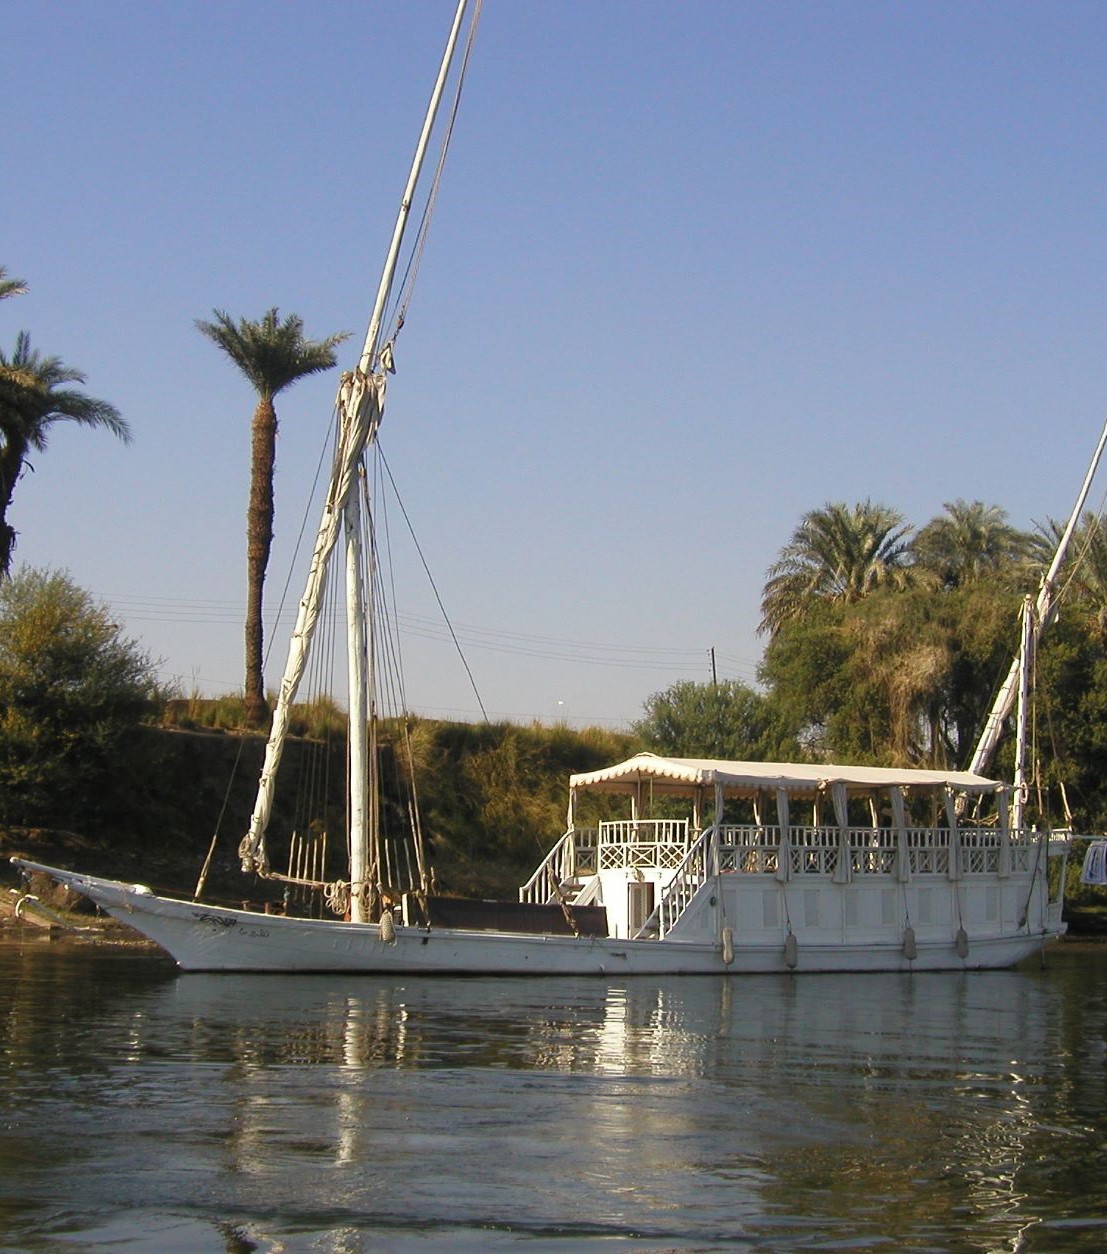 Historic dahabeya at anchor along the Nile in Egypt